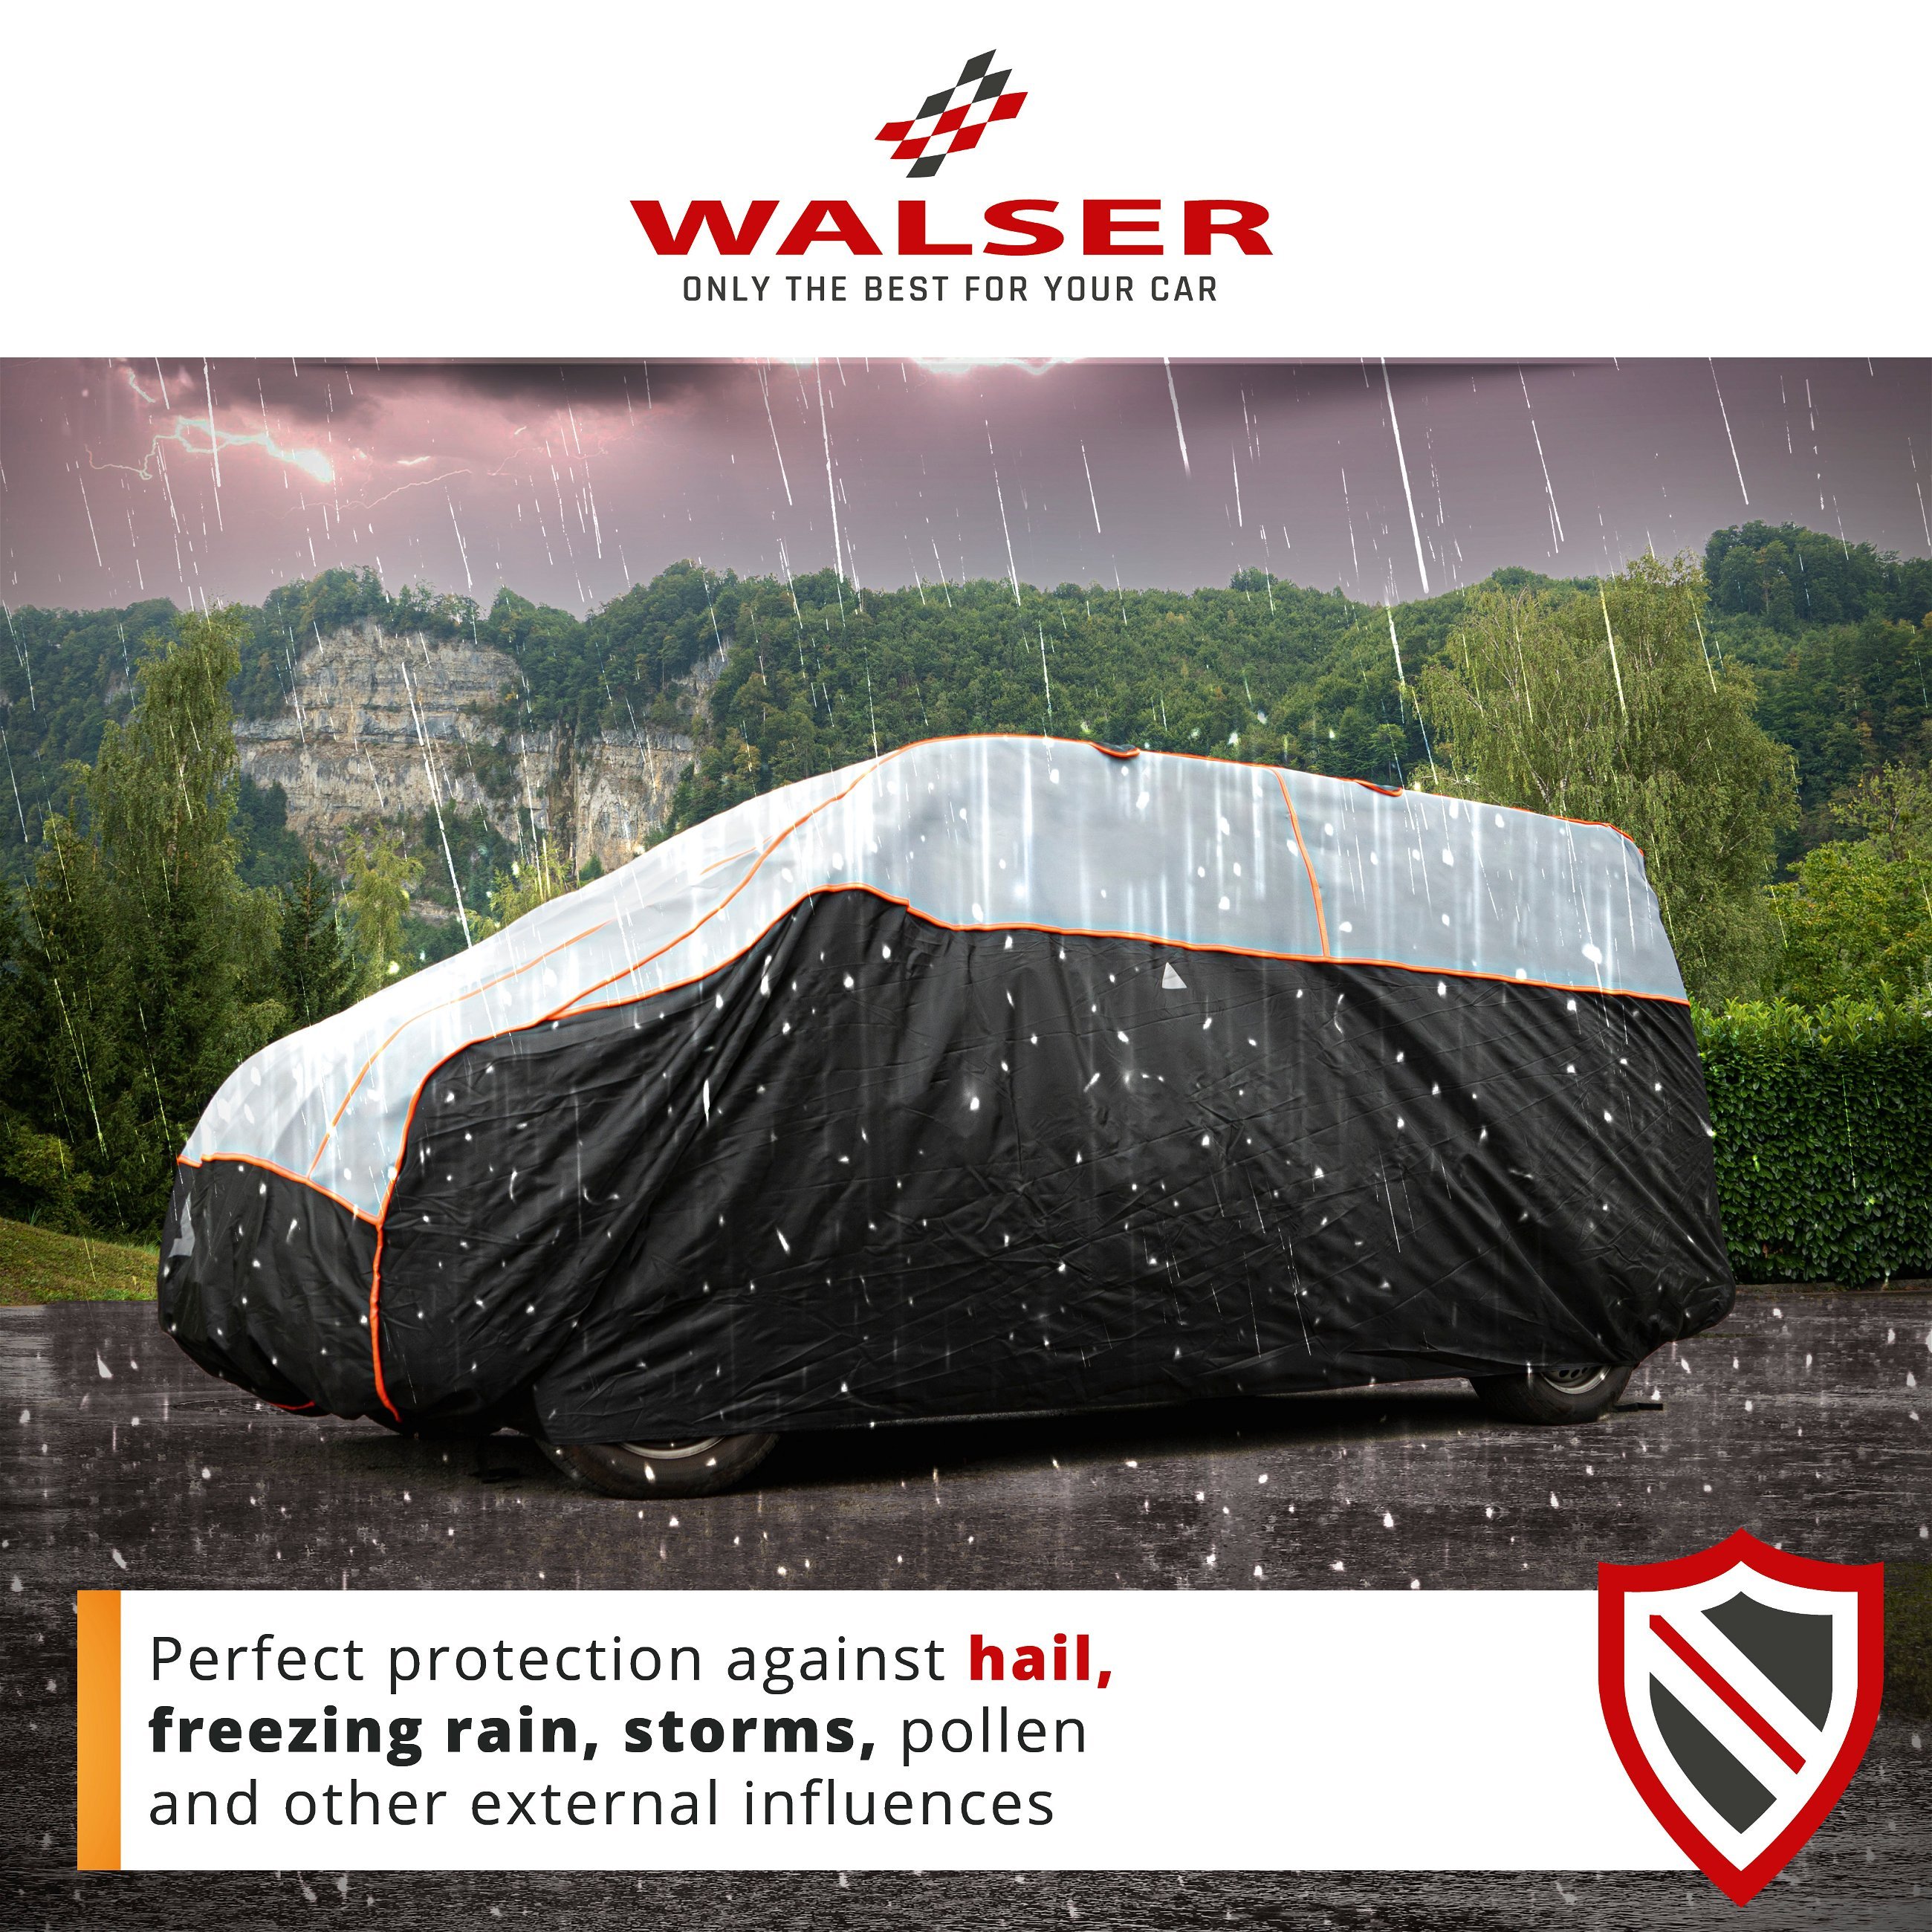 Bus hail protection tarpaulin Perma Protect size L